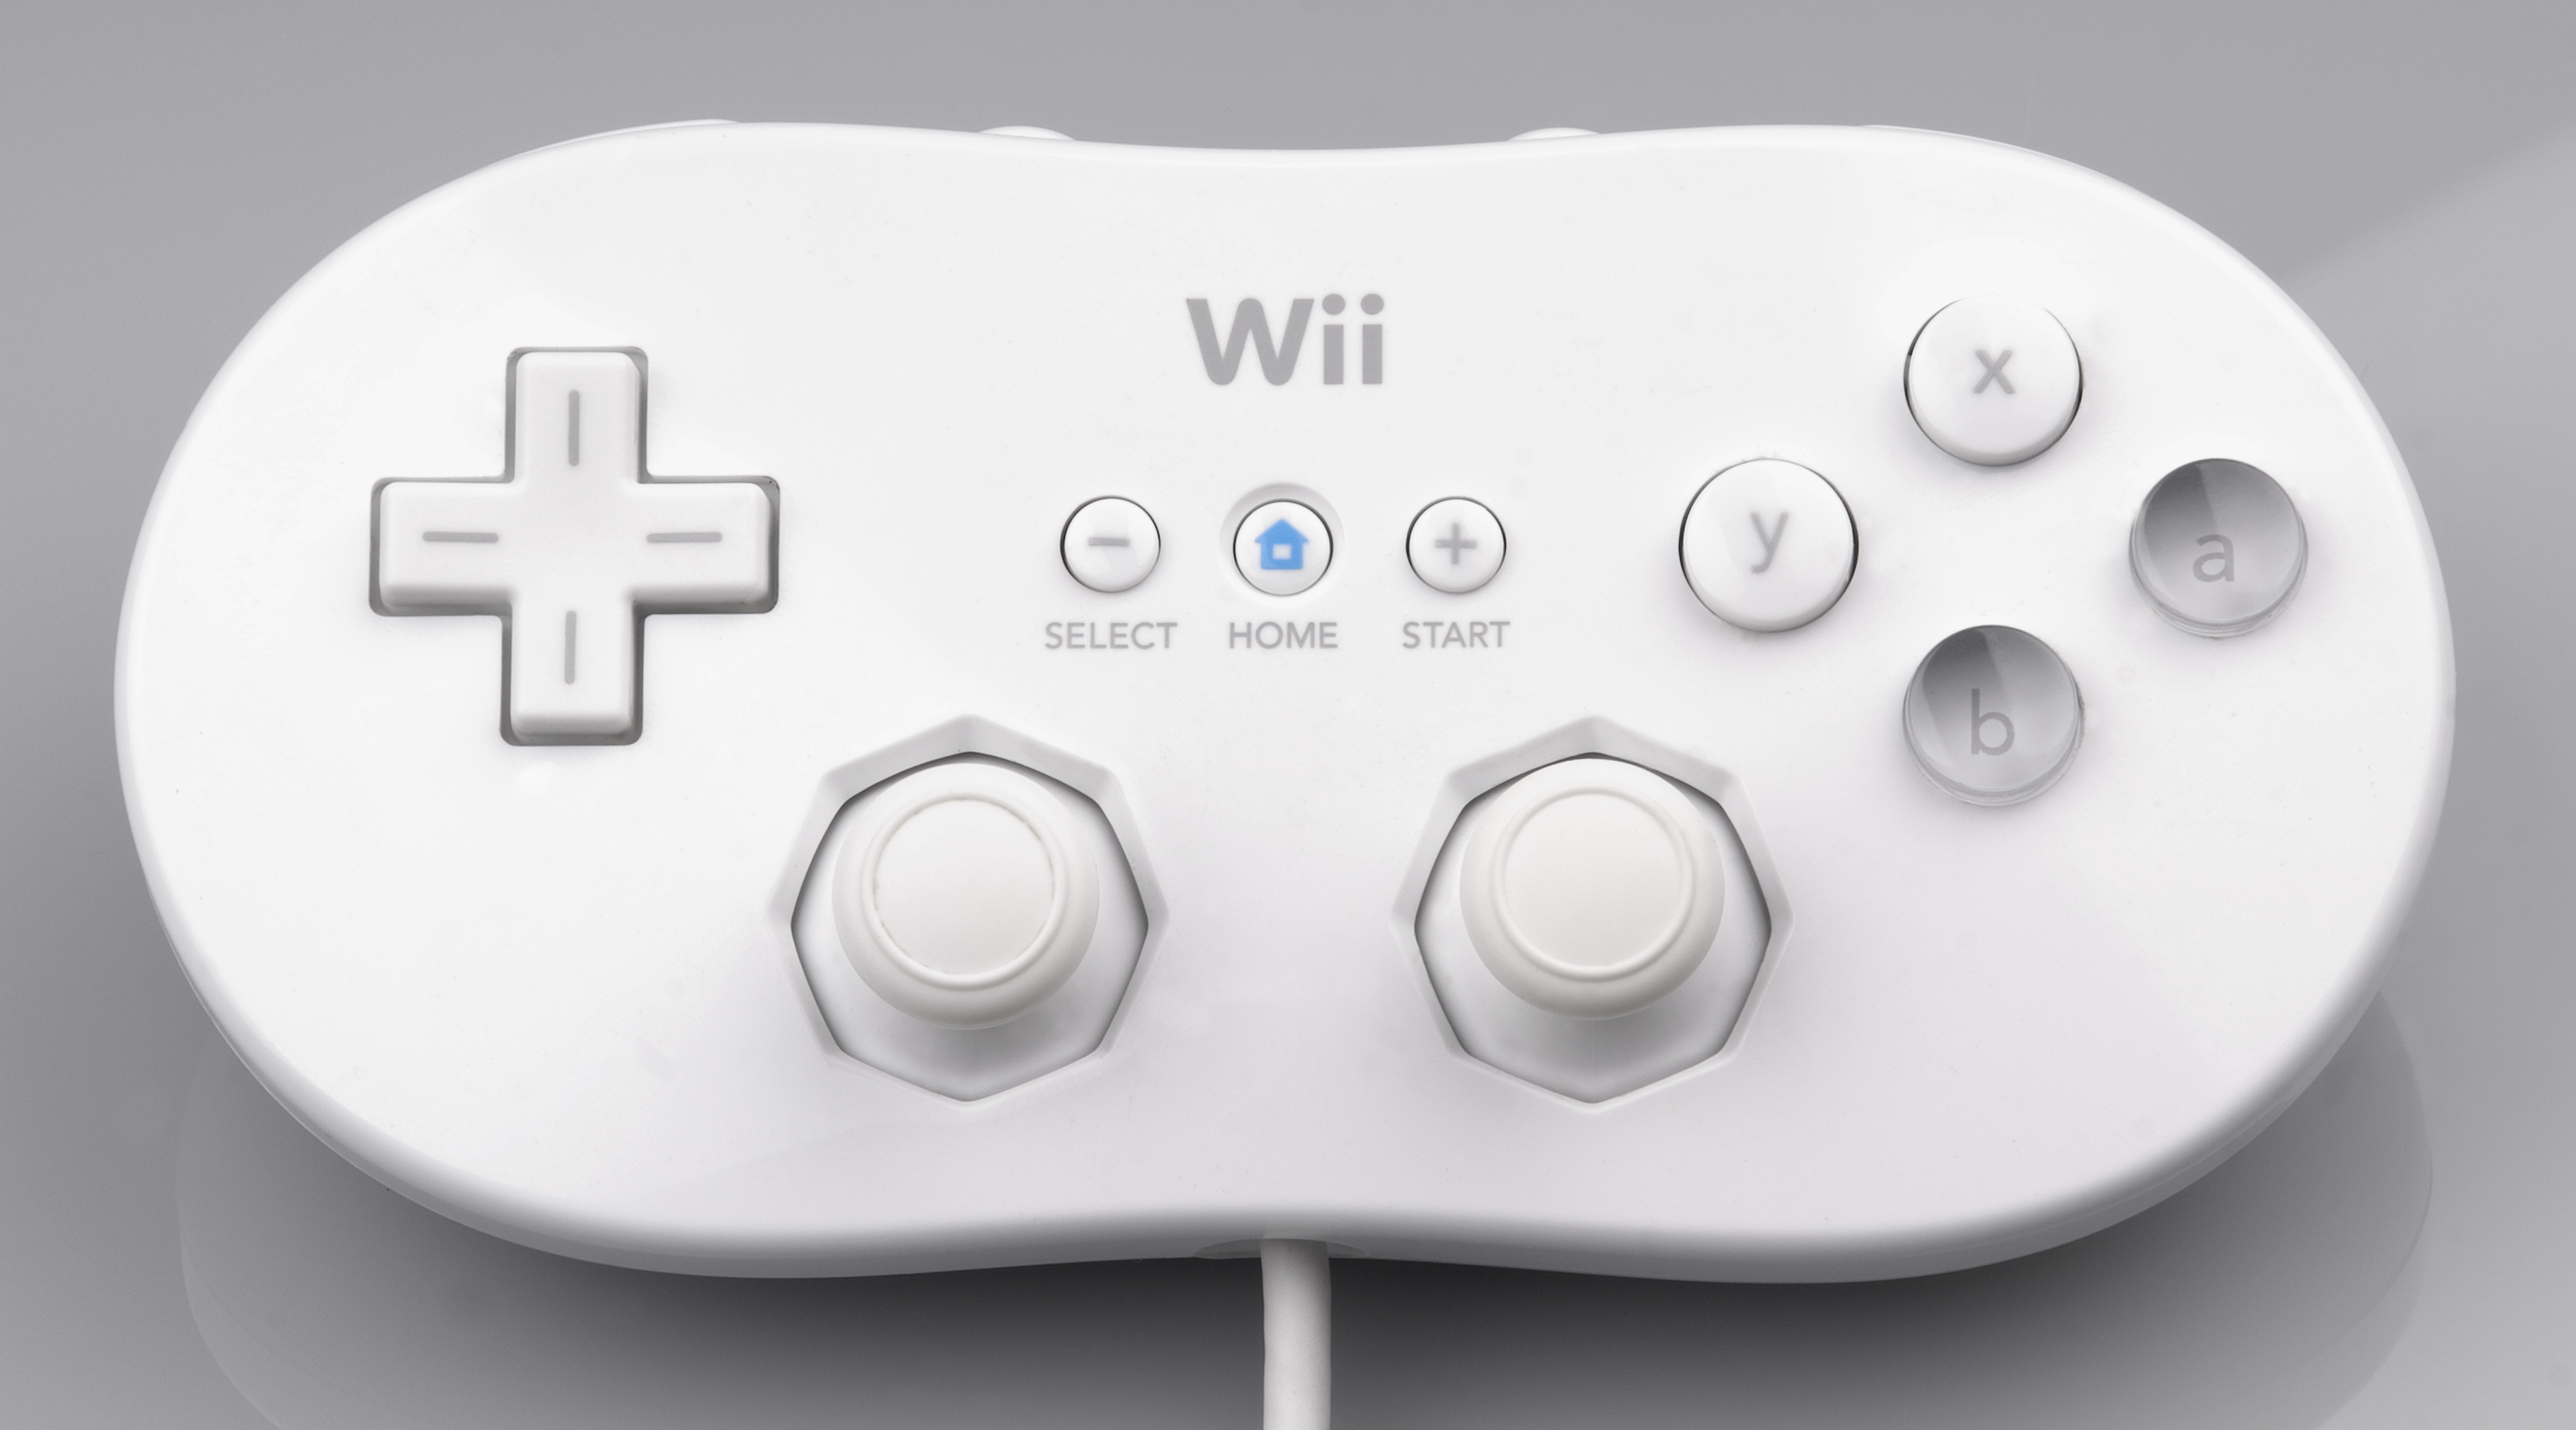 Wii U: Nintendo will do just fine